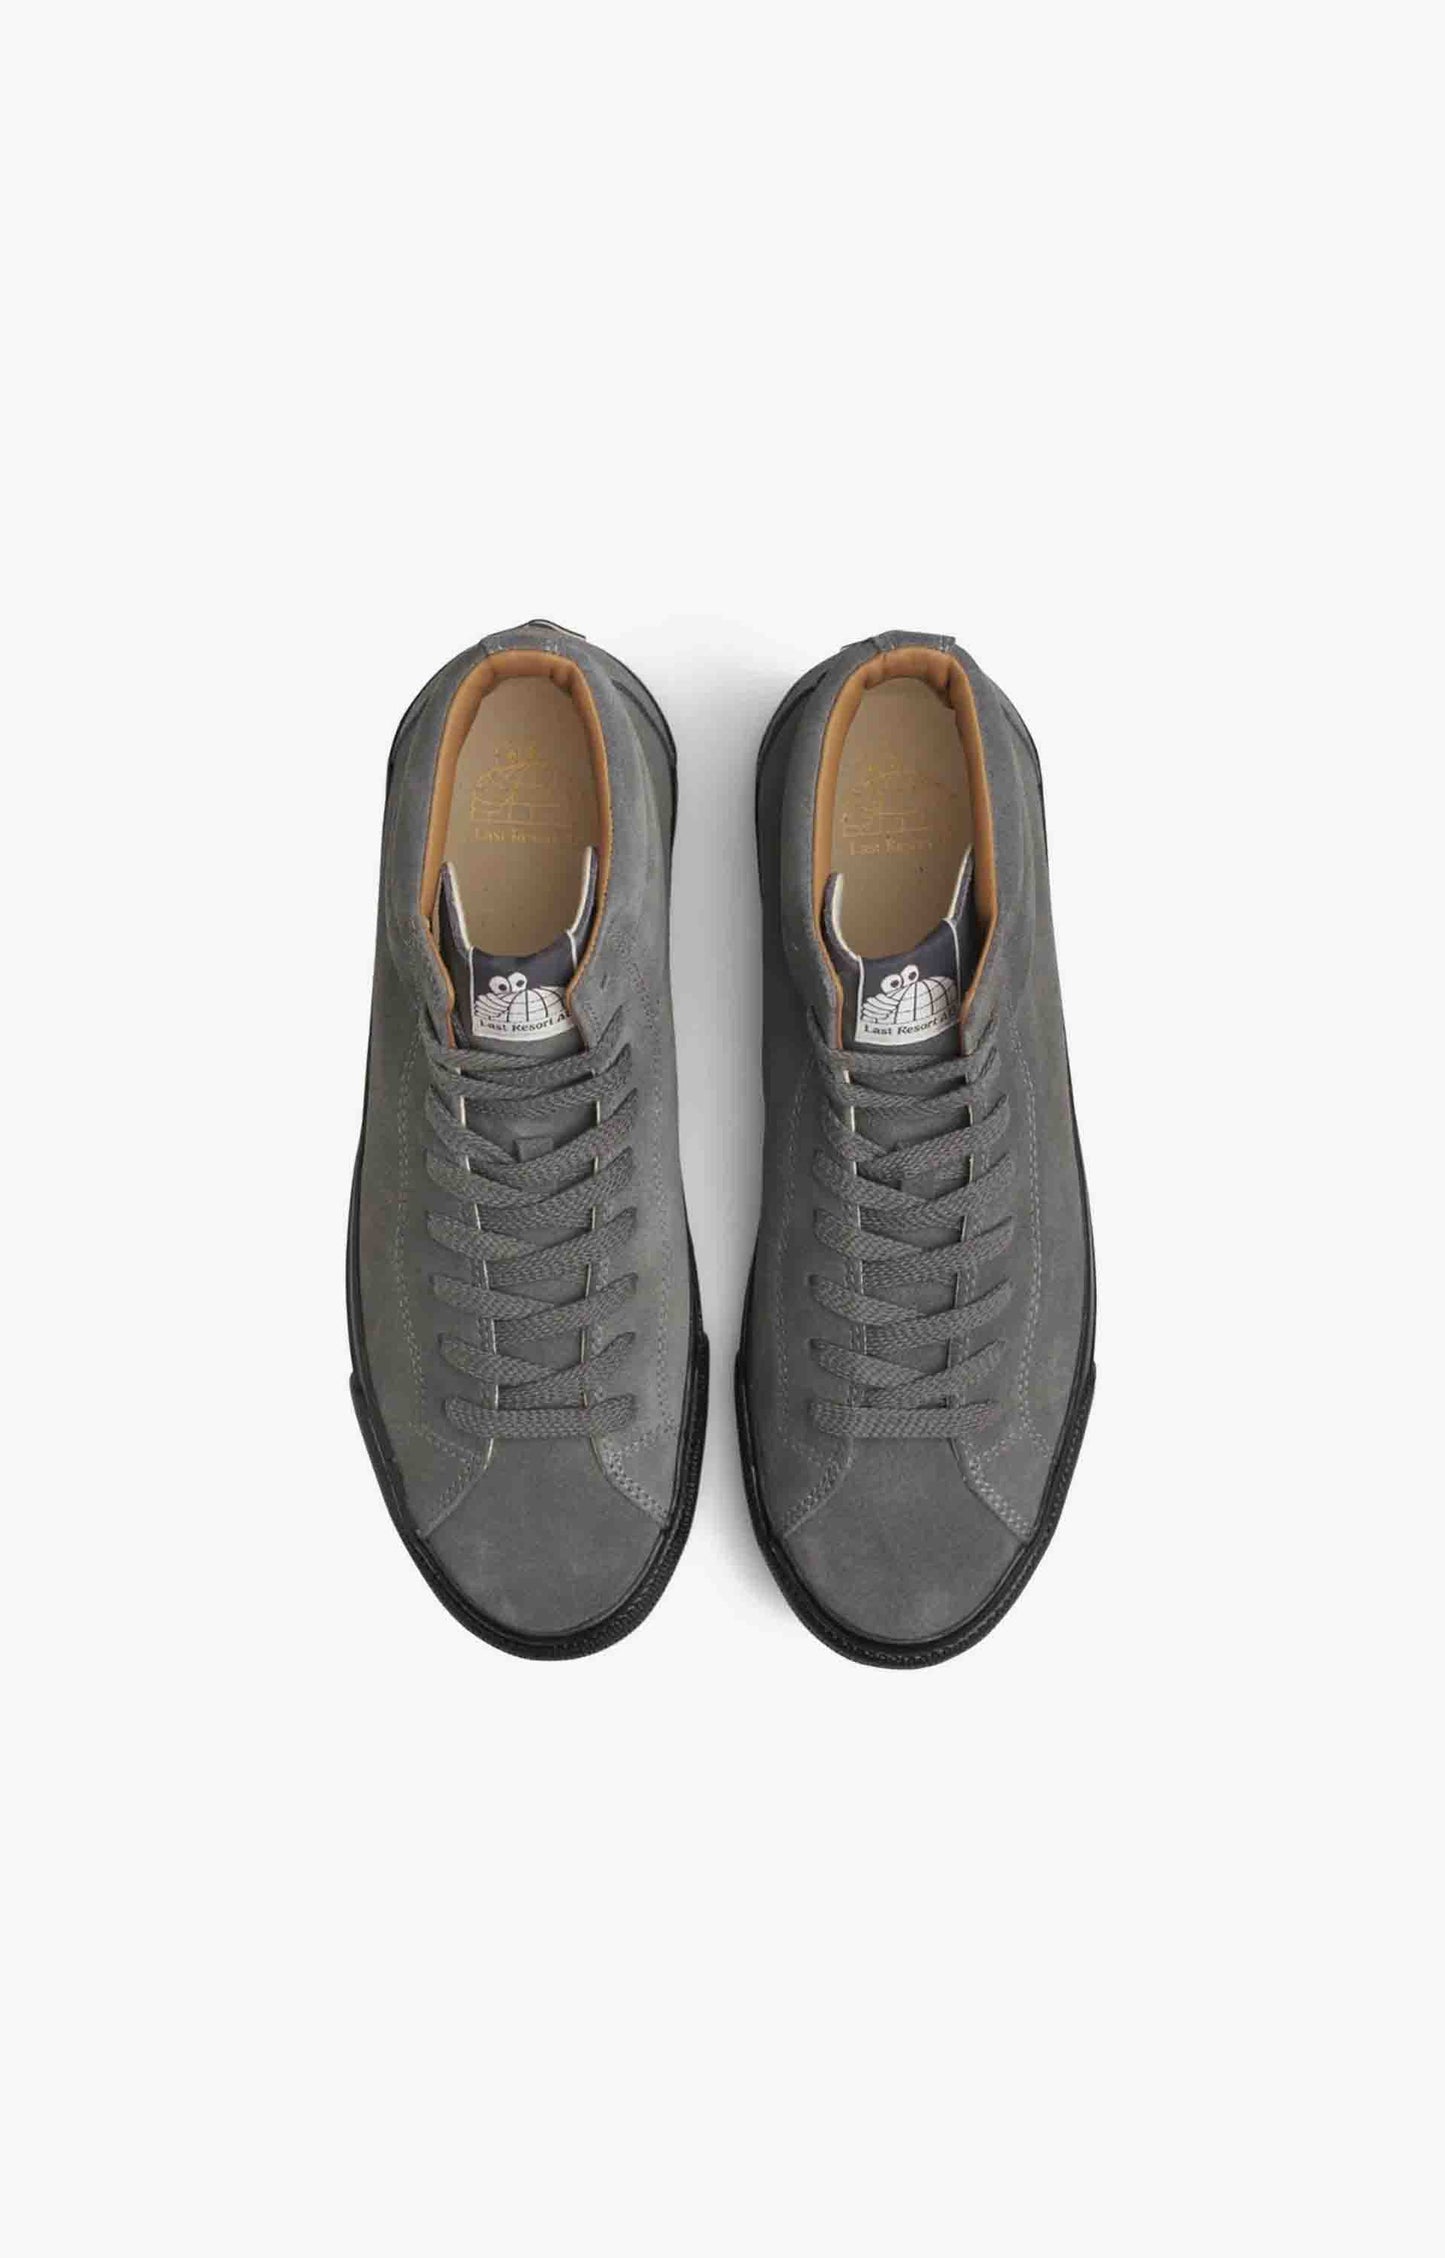 Last Resort AB Suede Hi VM003 Mens Shoes, Steel Grey/Black